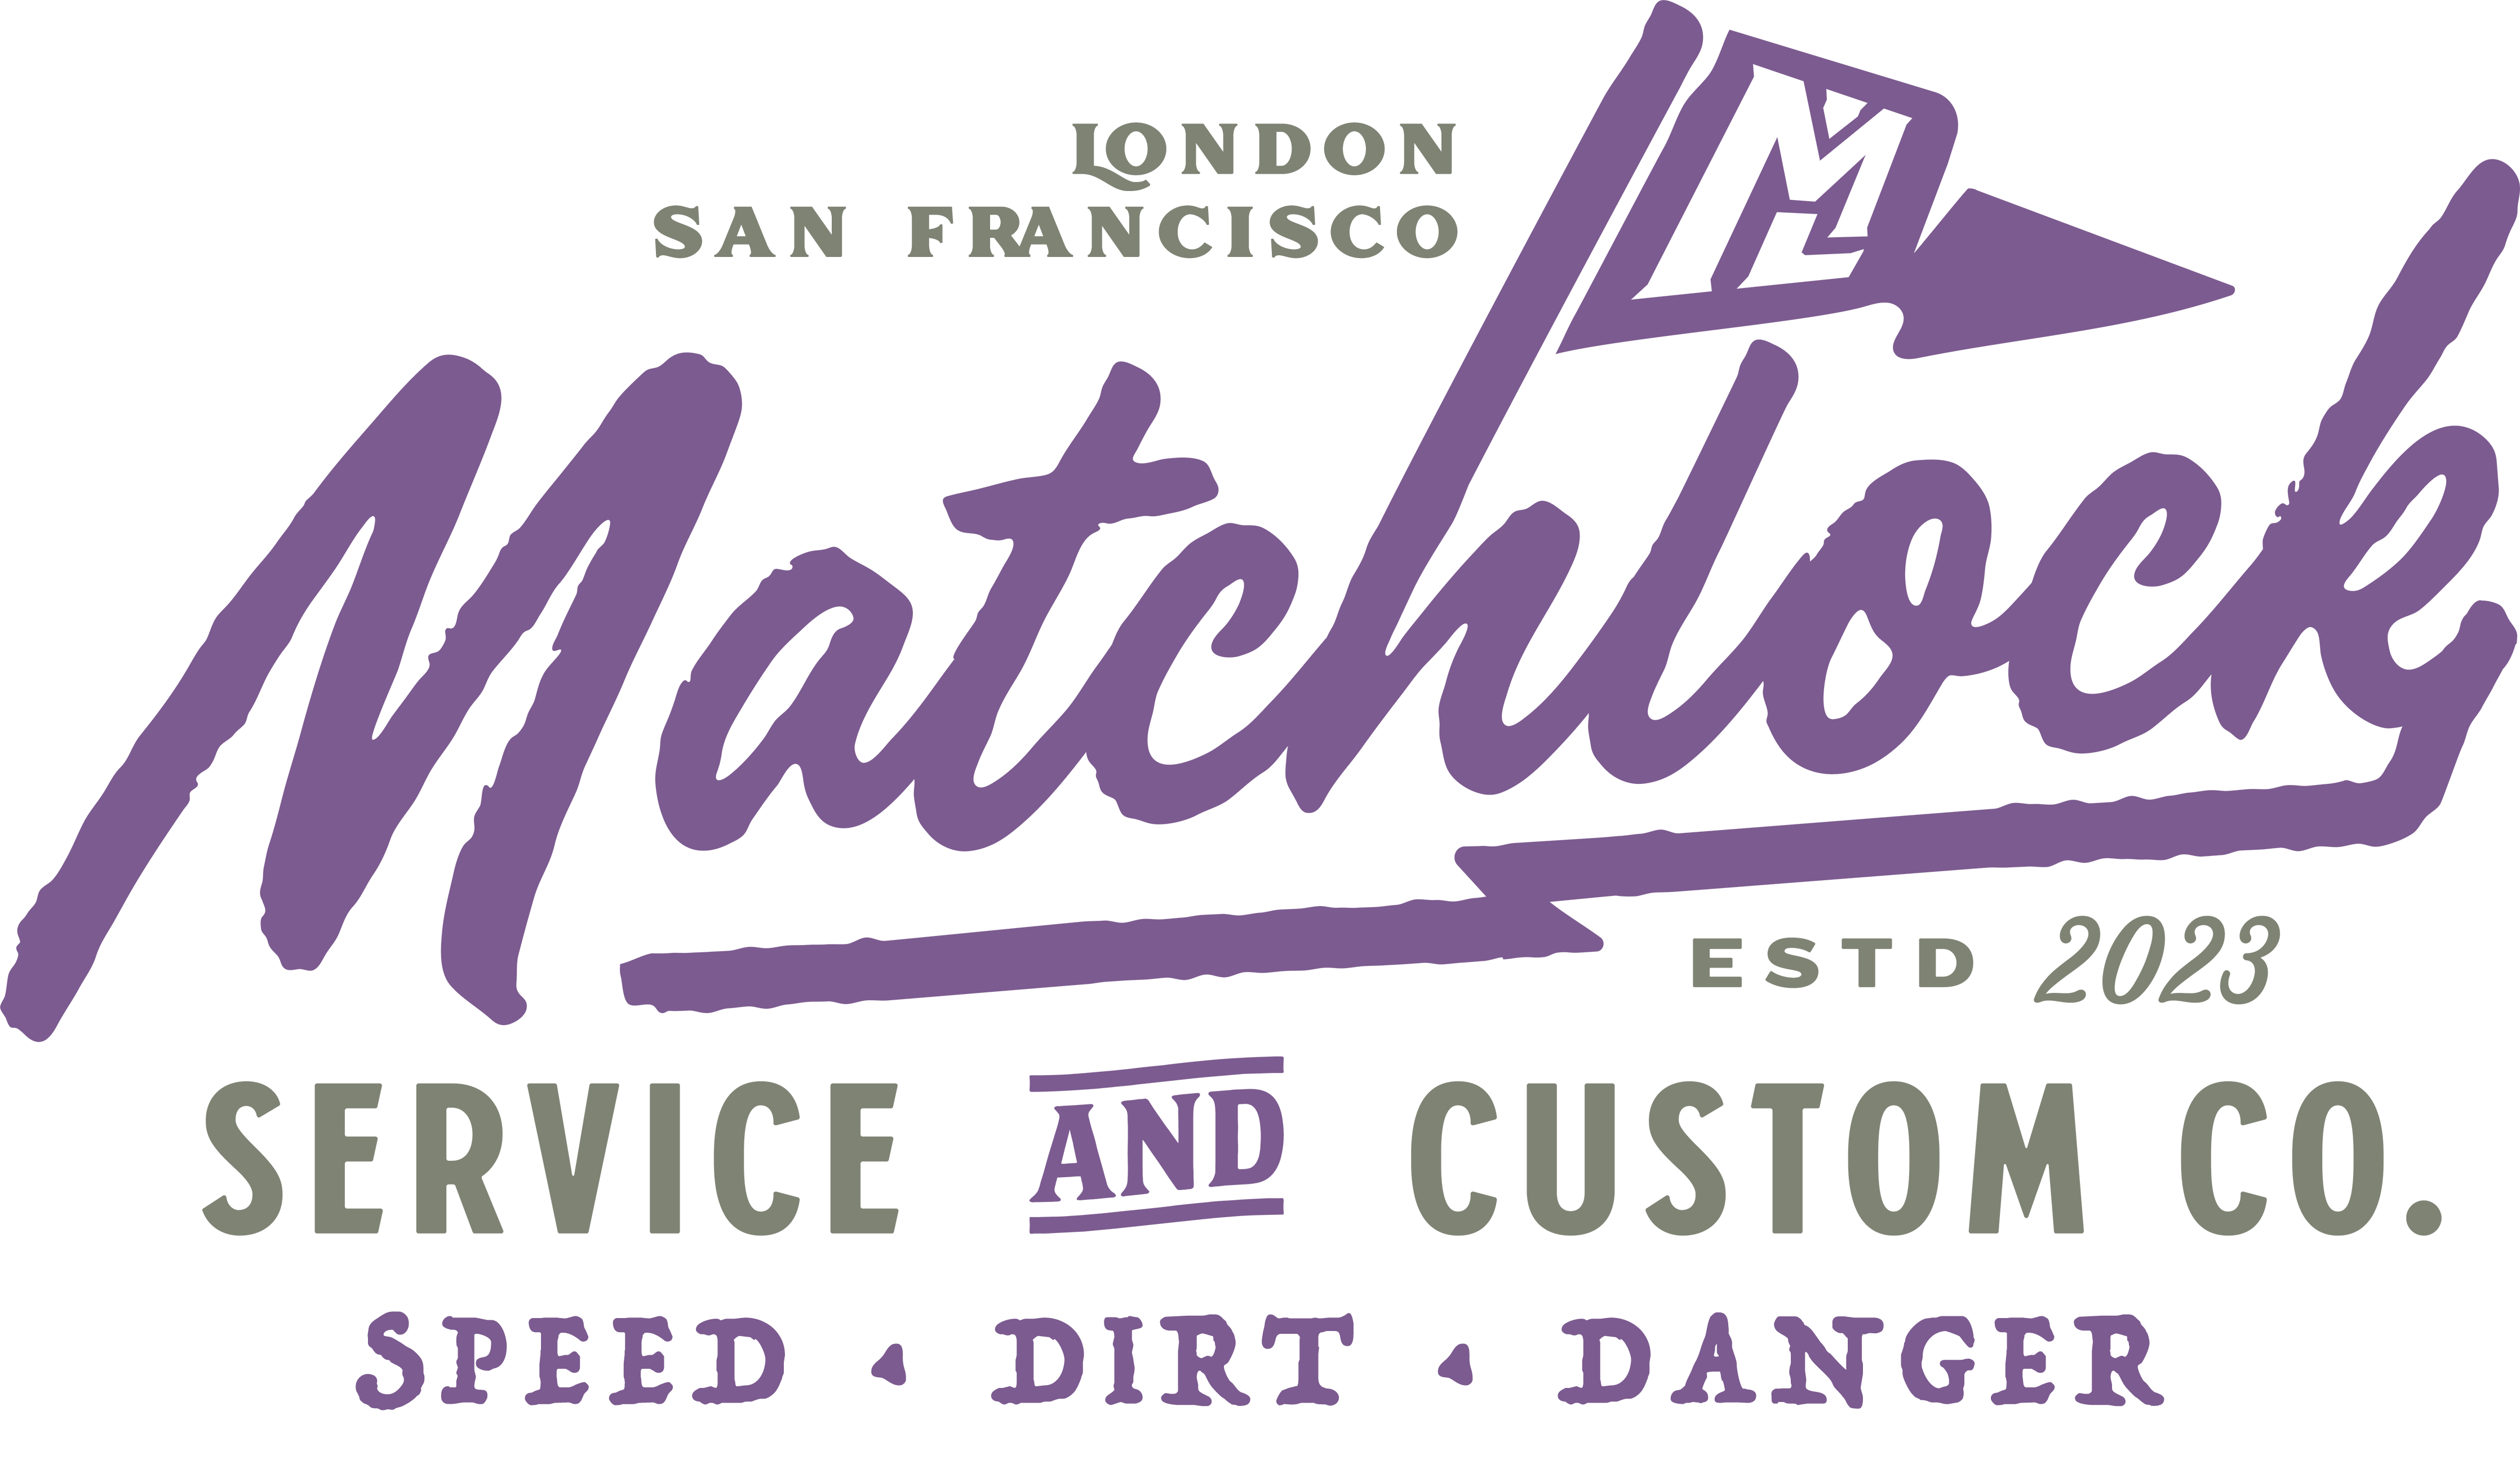 Matchlock Industries